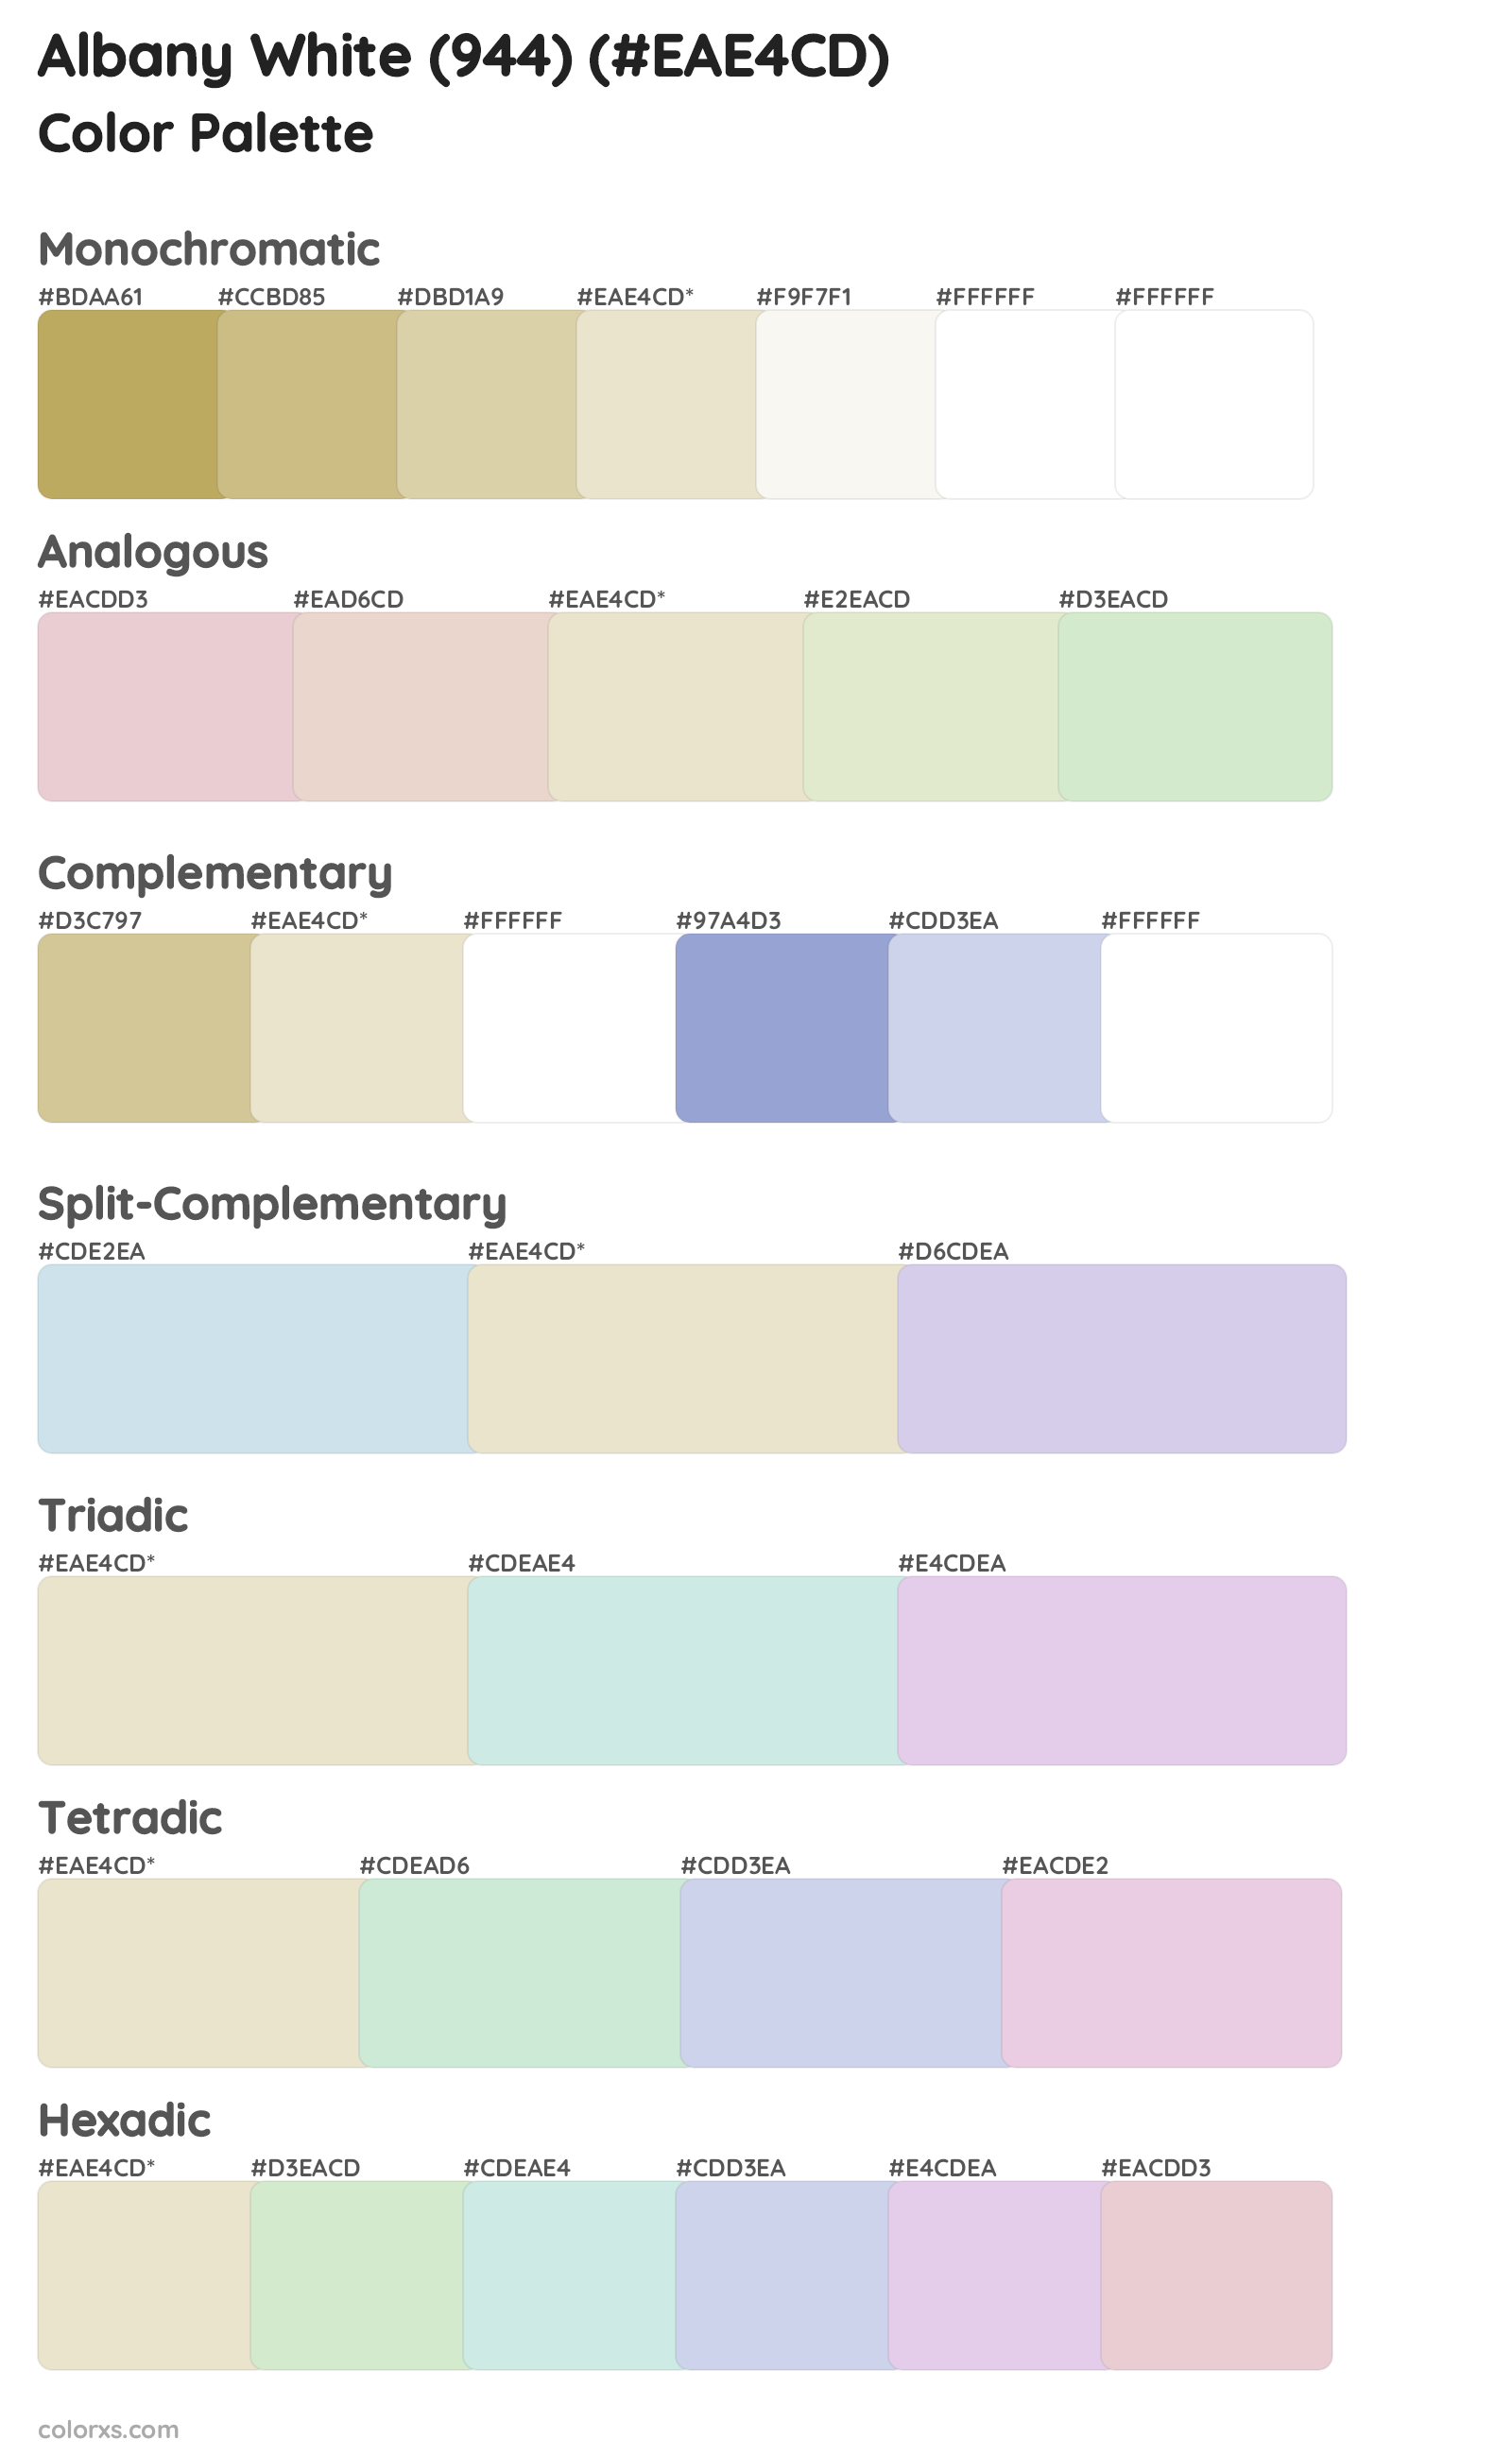 Albany White (944) Color Scheme Palettes